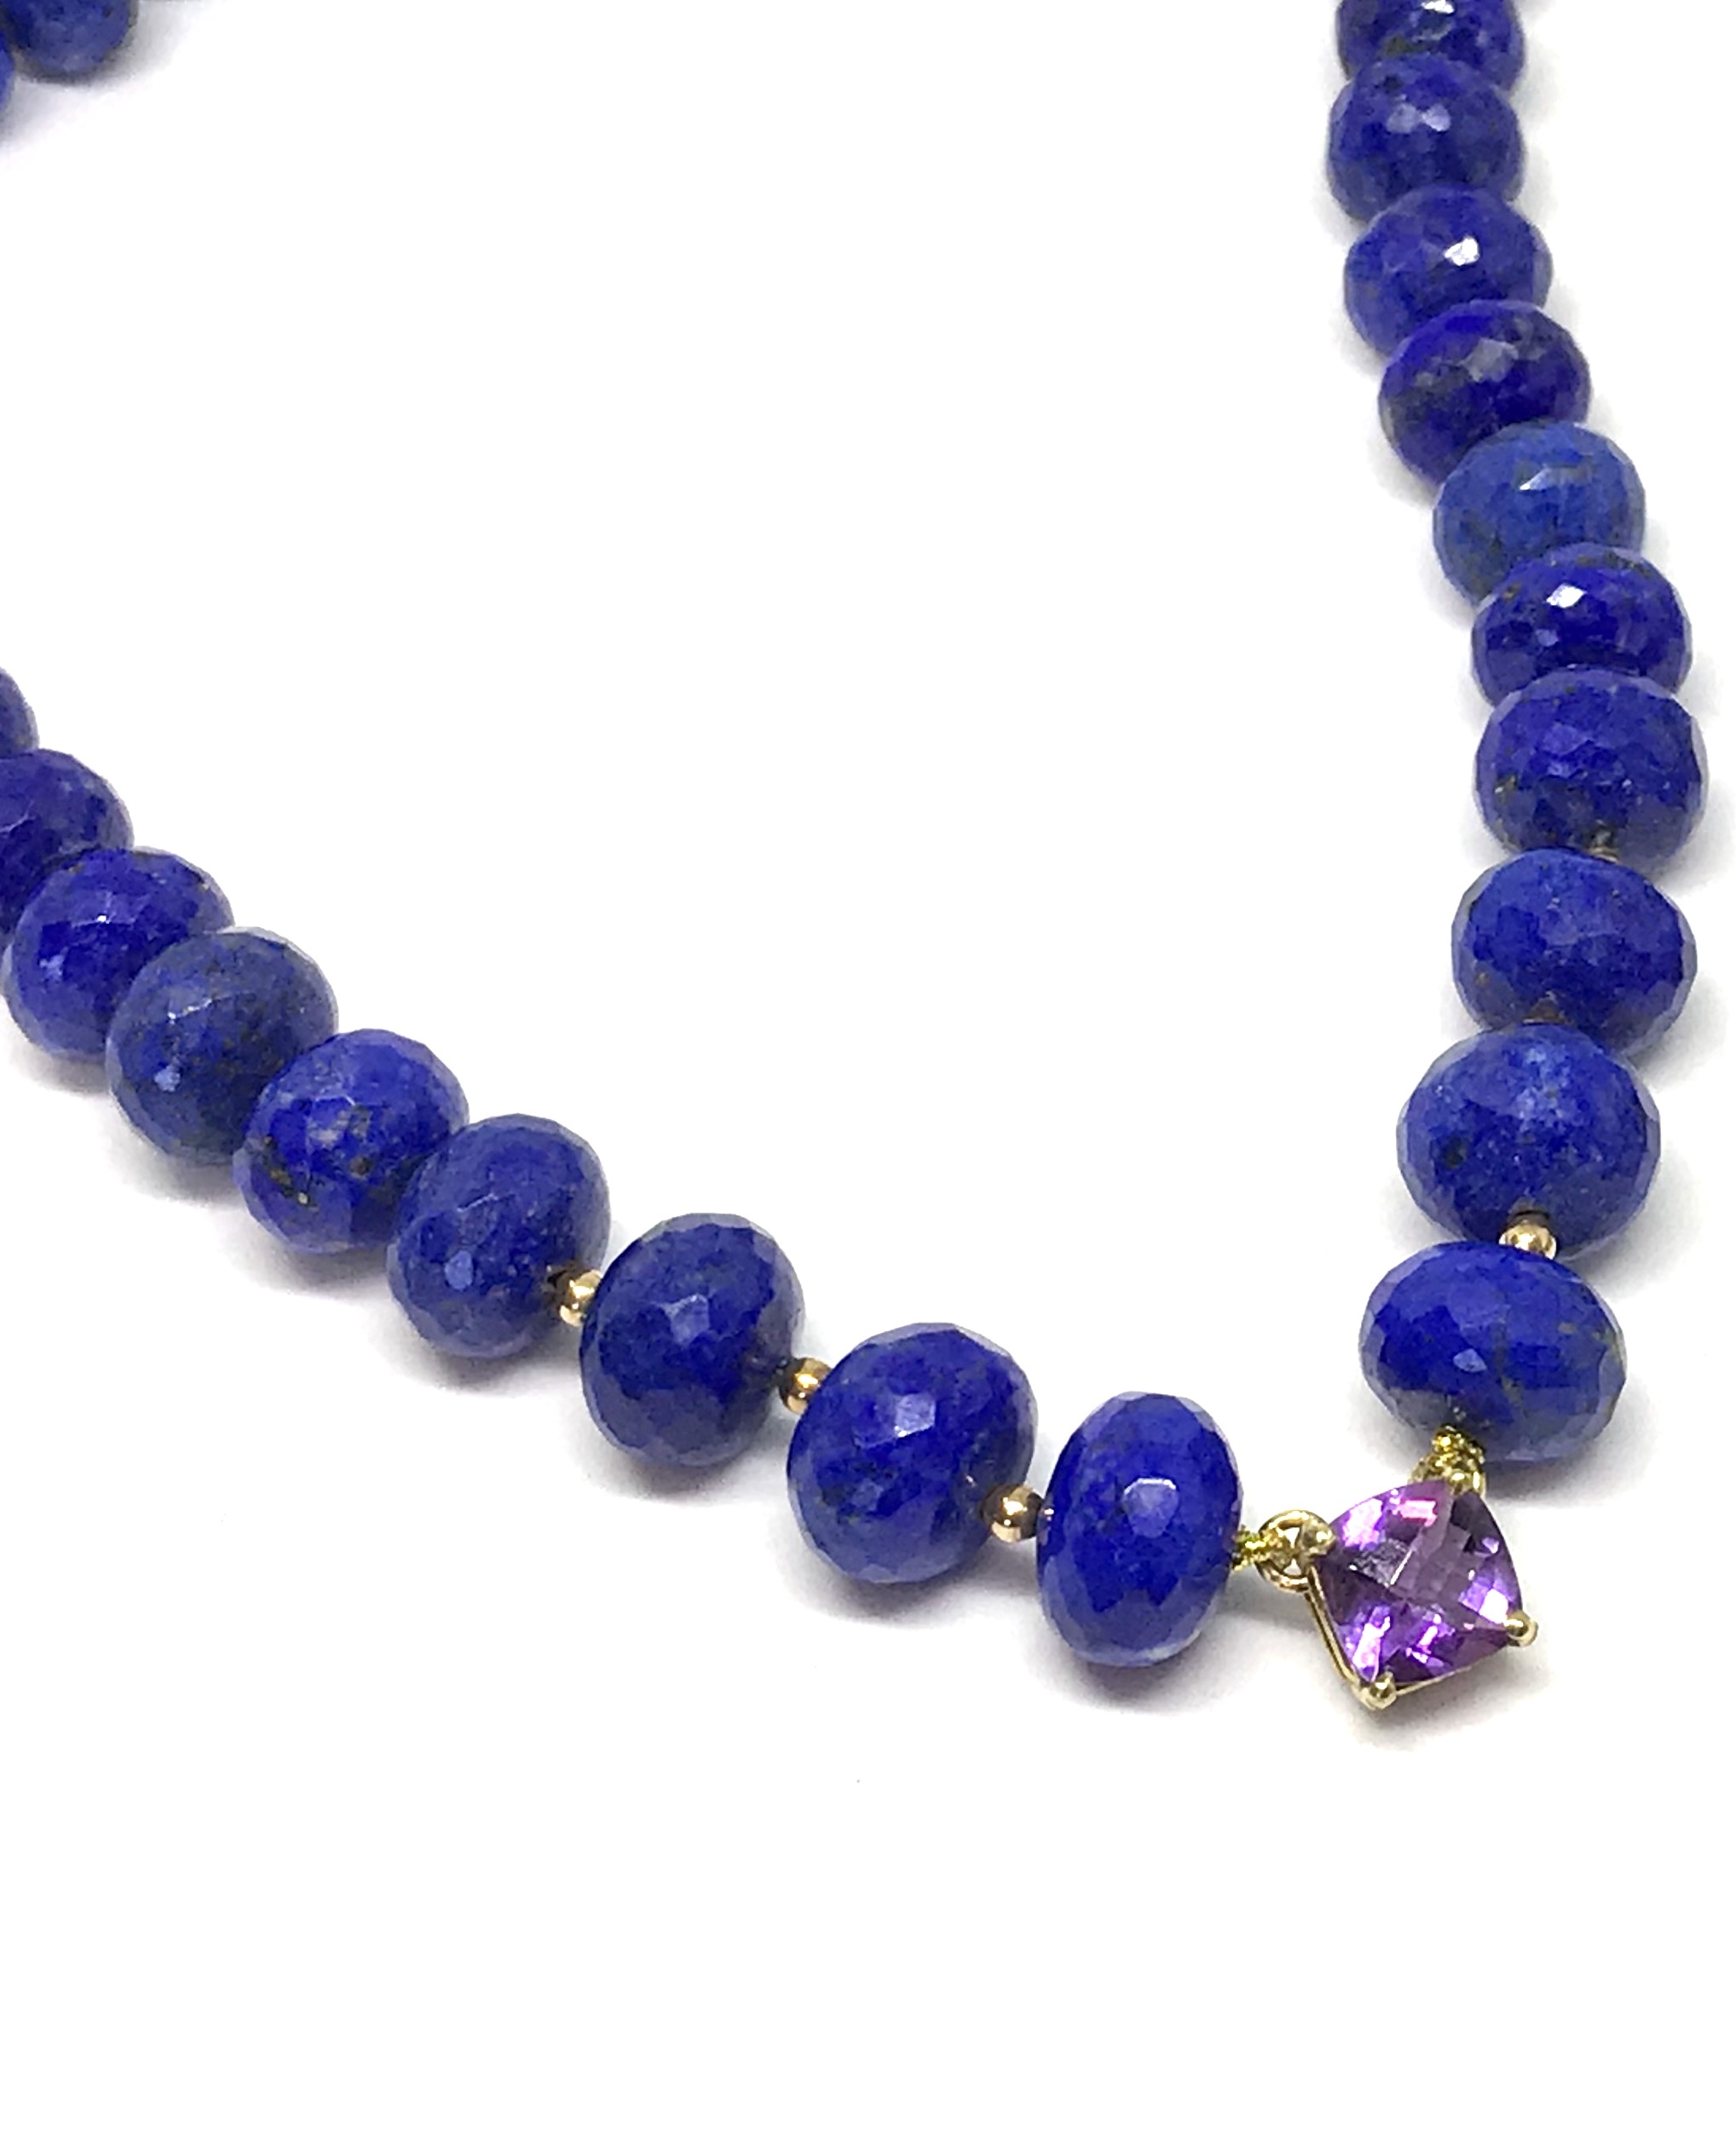 Afghanistan Lapiz Lazuli Necklace アフガニスタン産 ラピスラズリ・ネックレス | empress bijoux